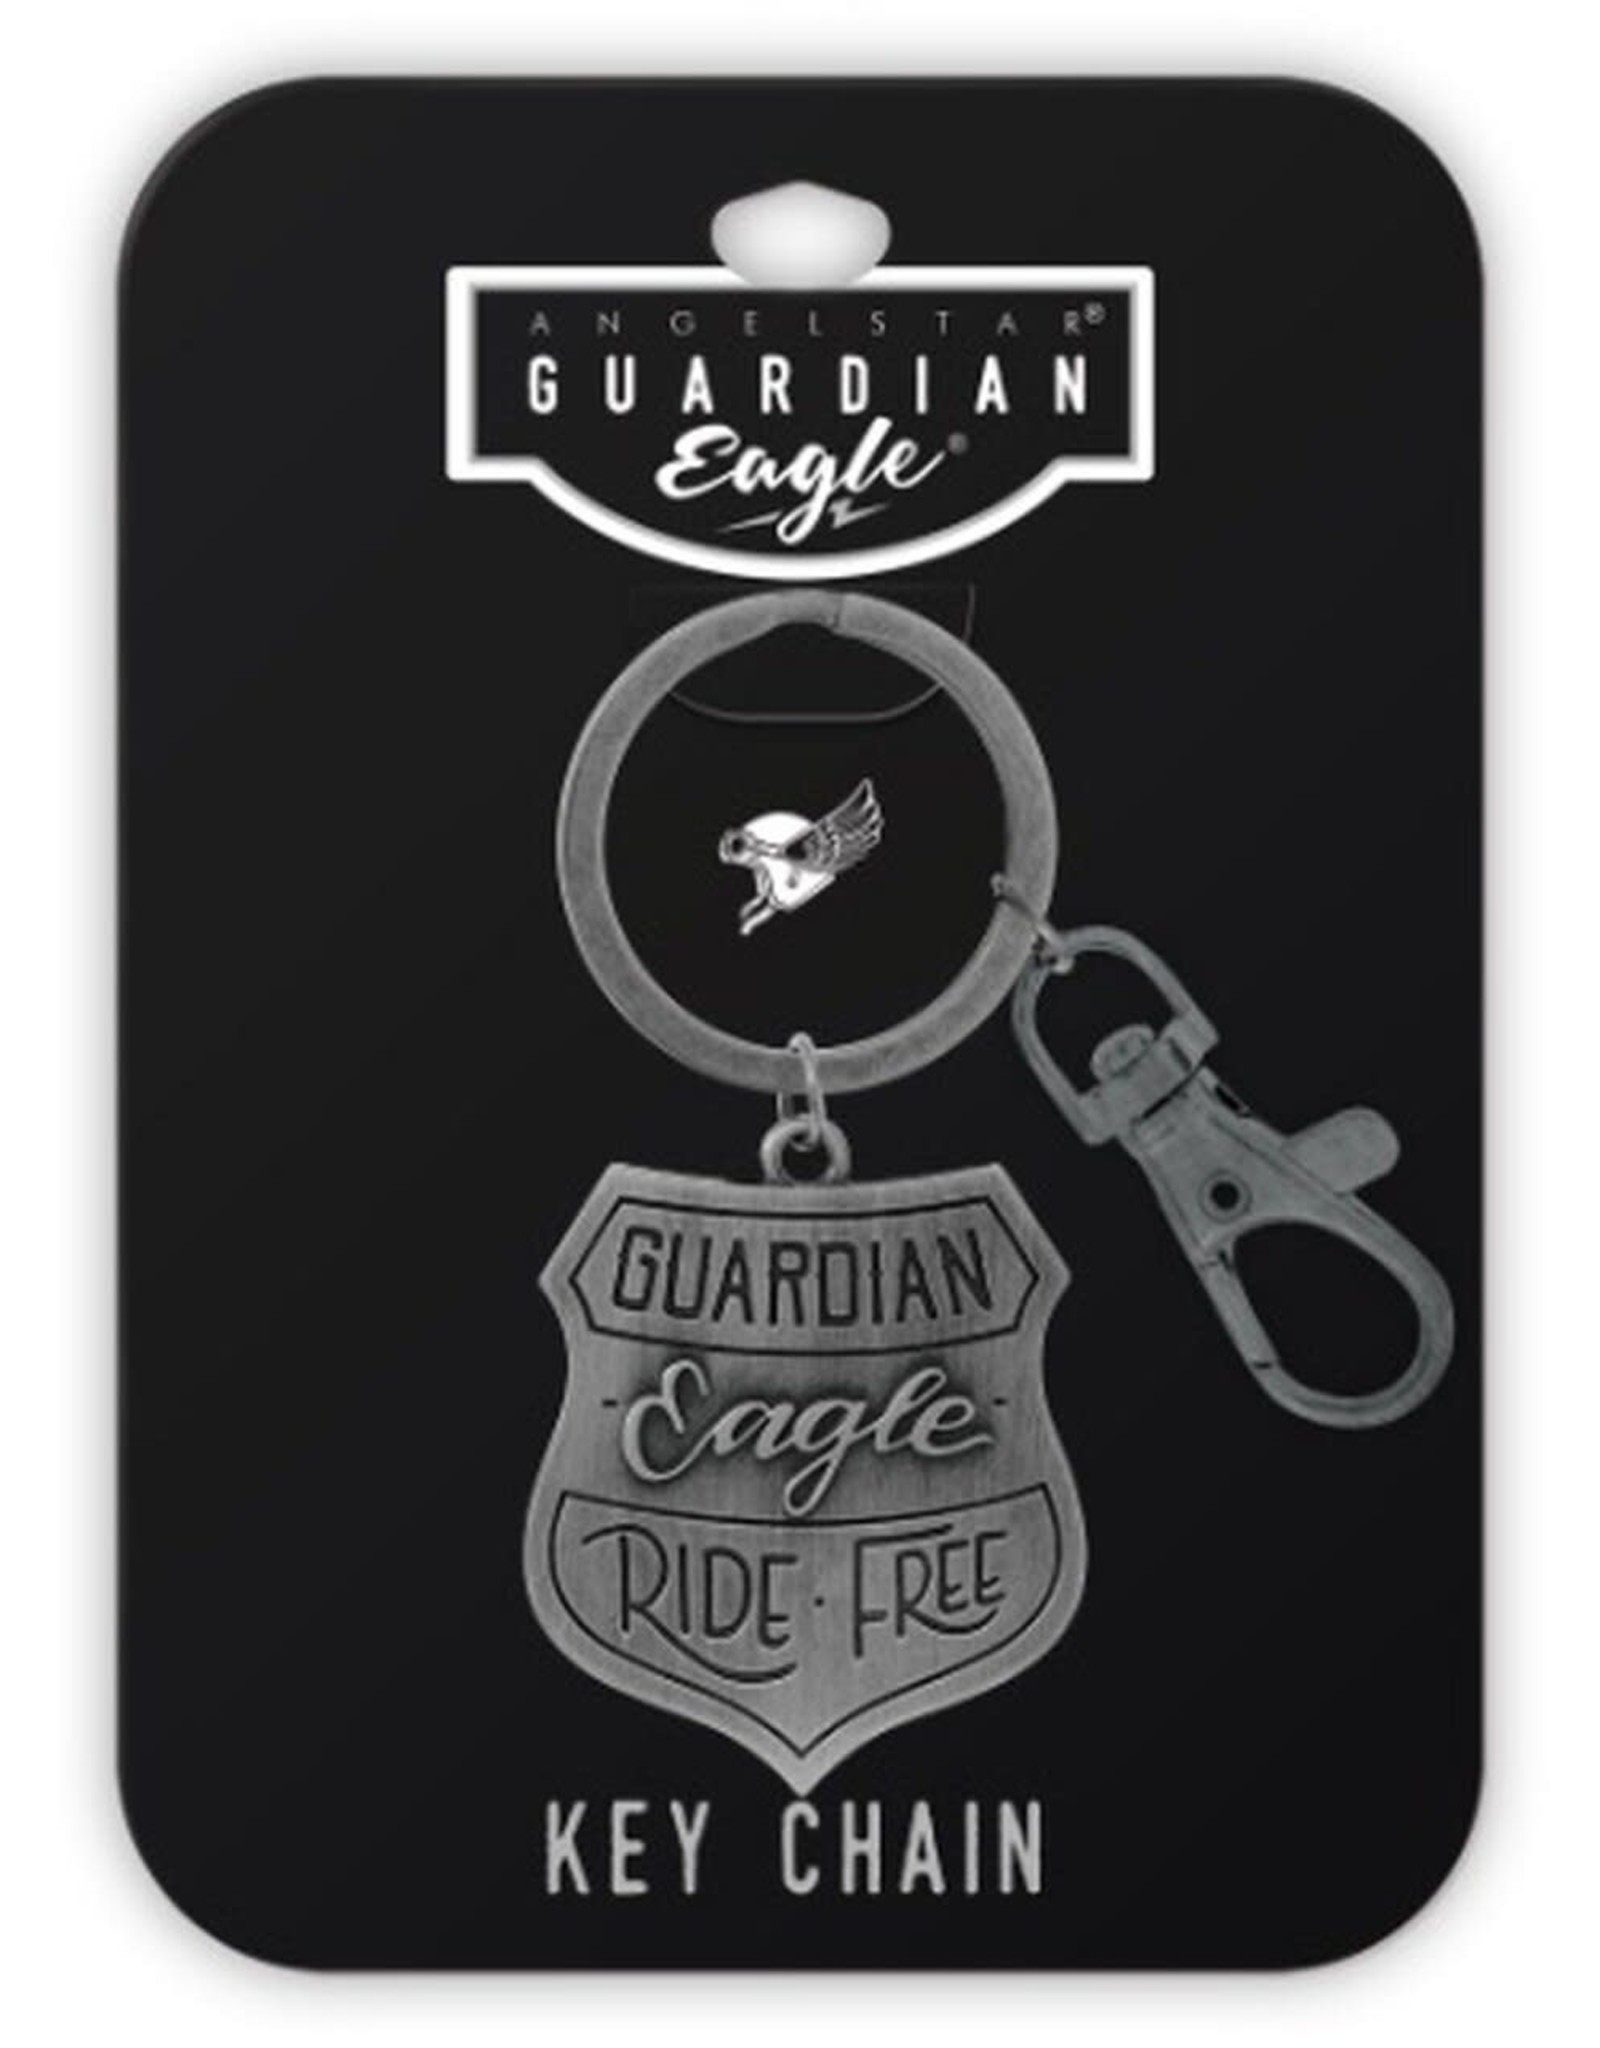 Guardian Eagle Keychains - Ride Free